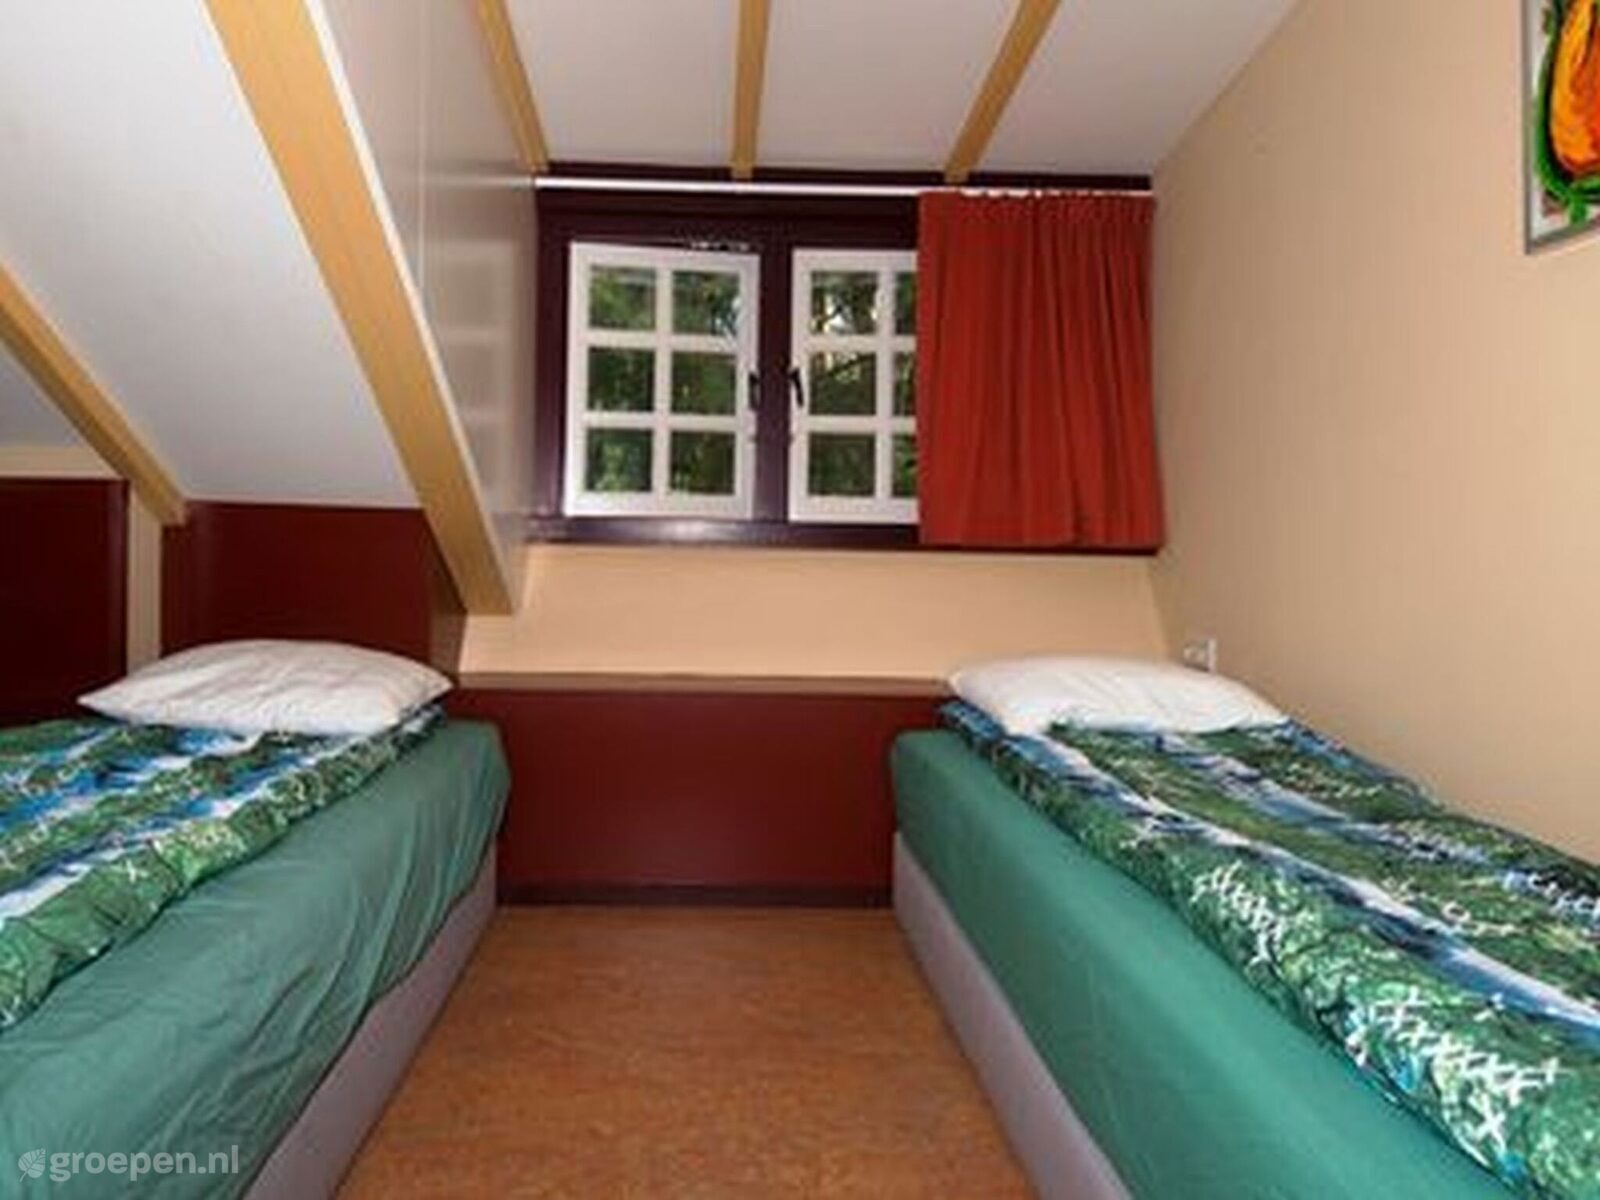 Group accommodation Beckum